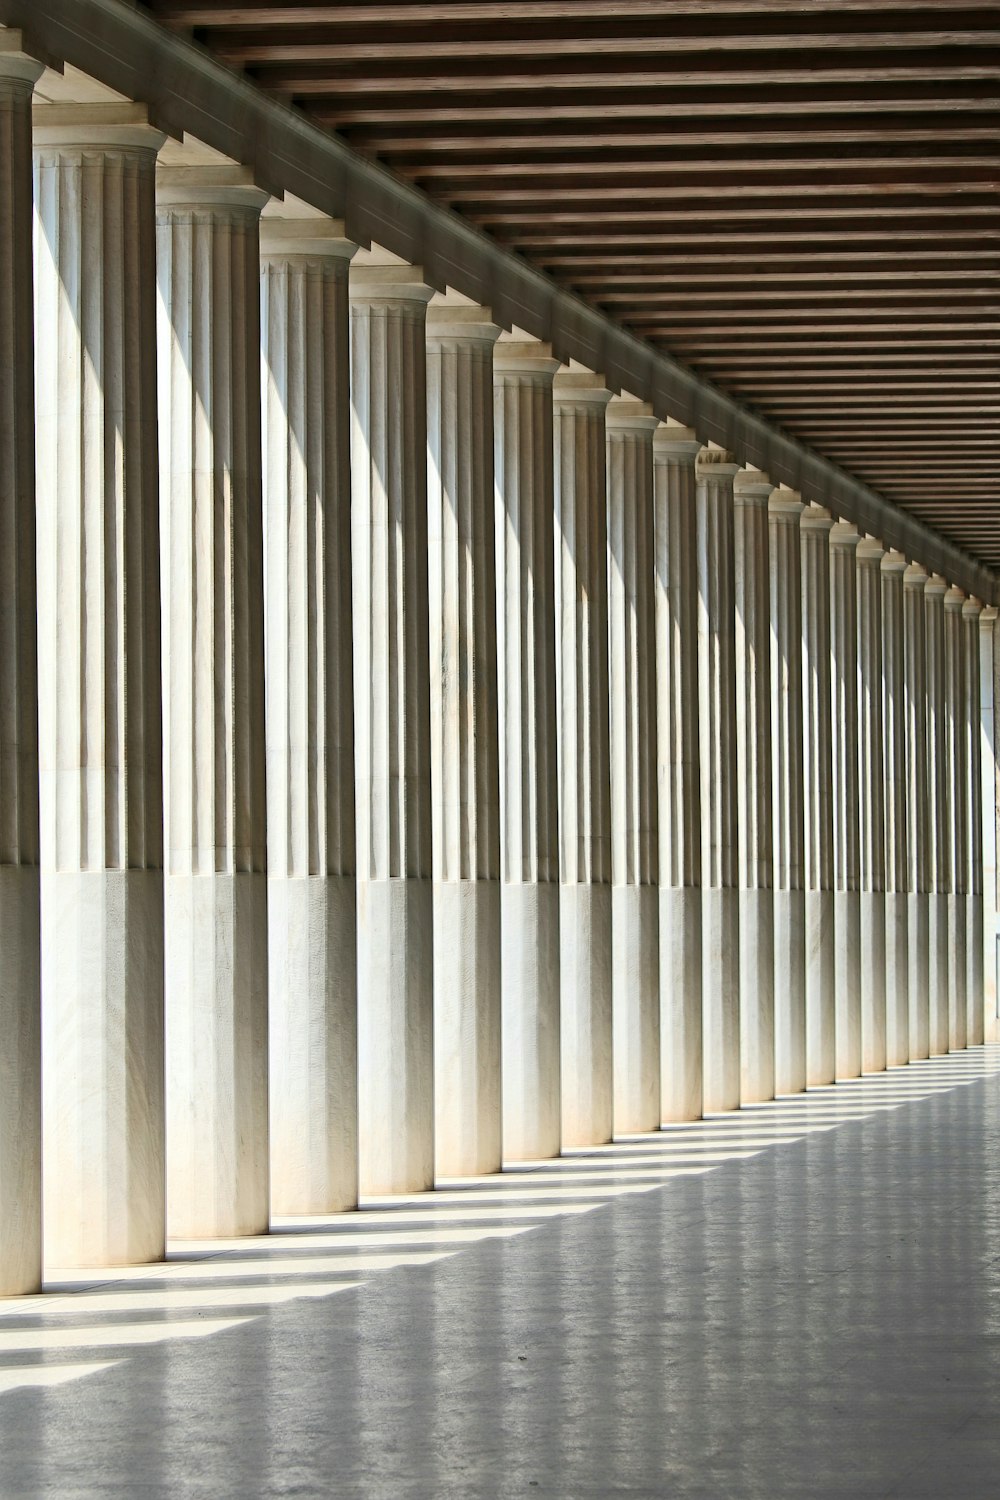 inline white concrete pillars with empty hallway